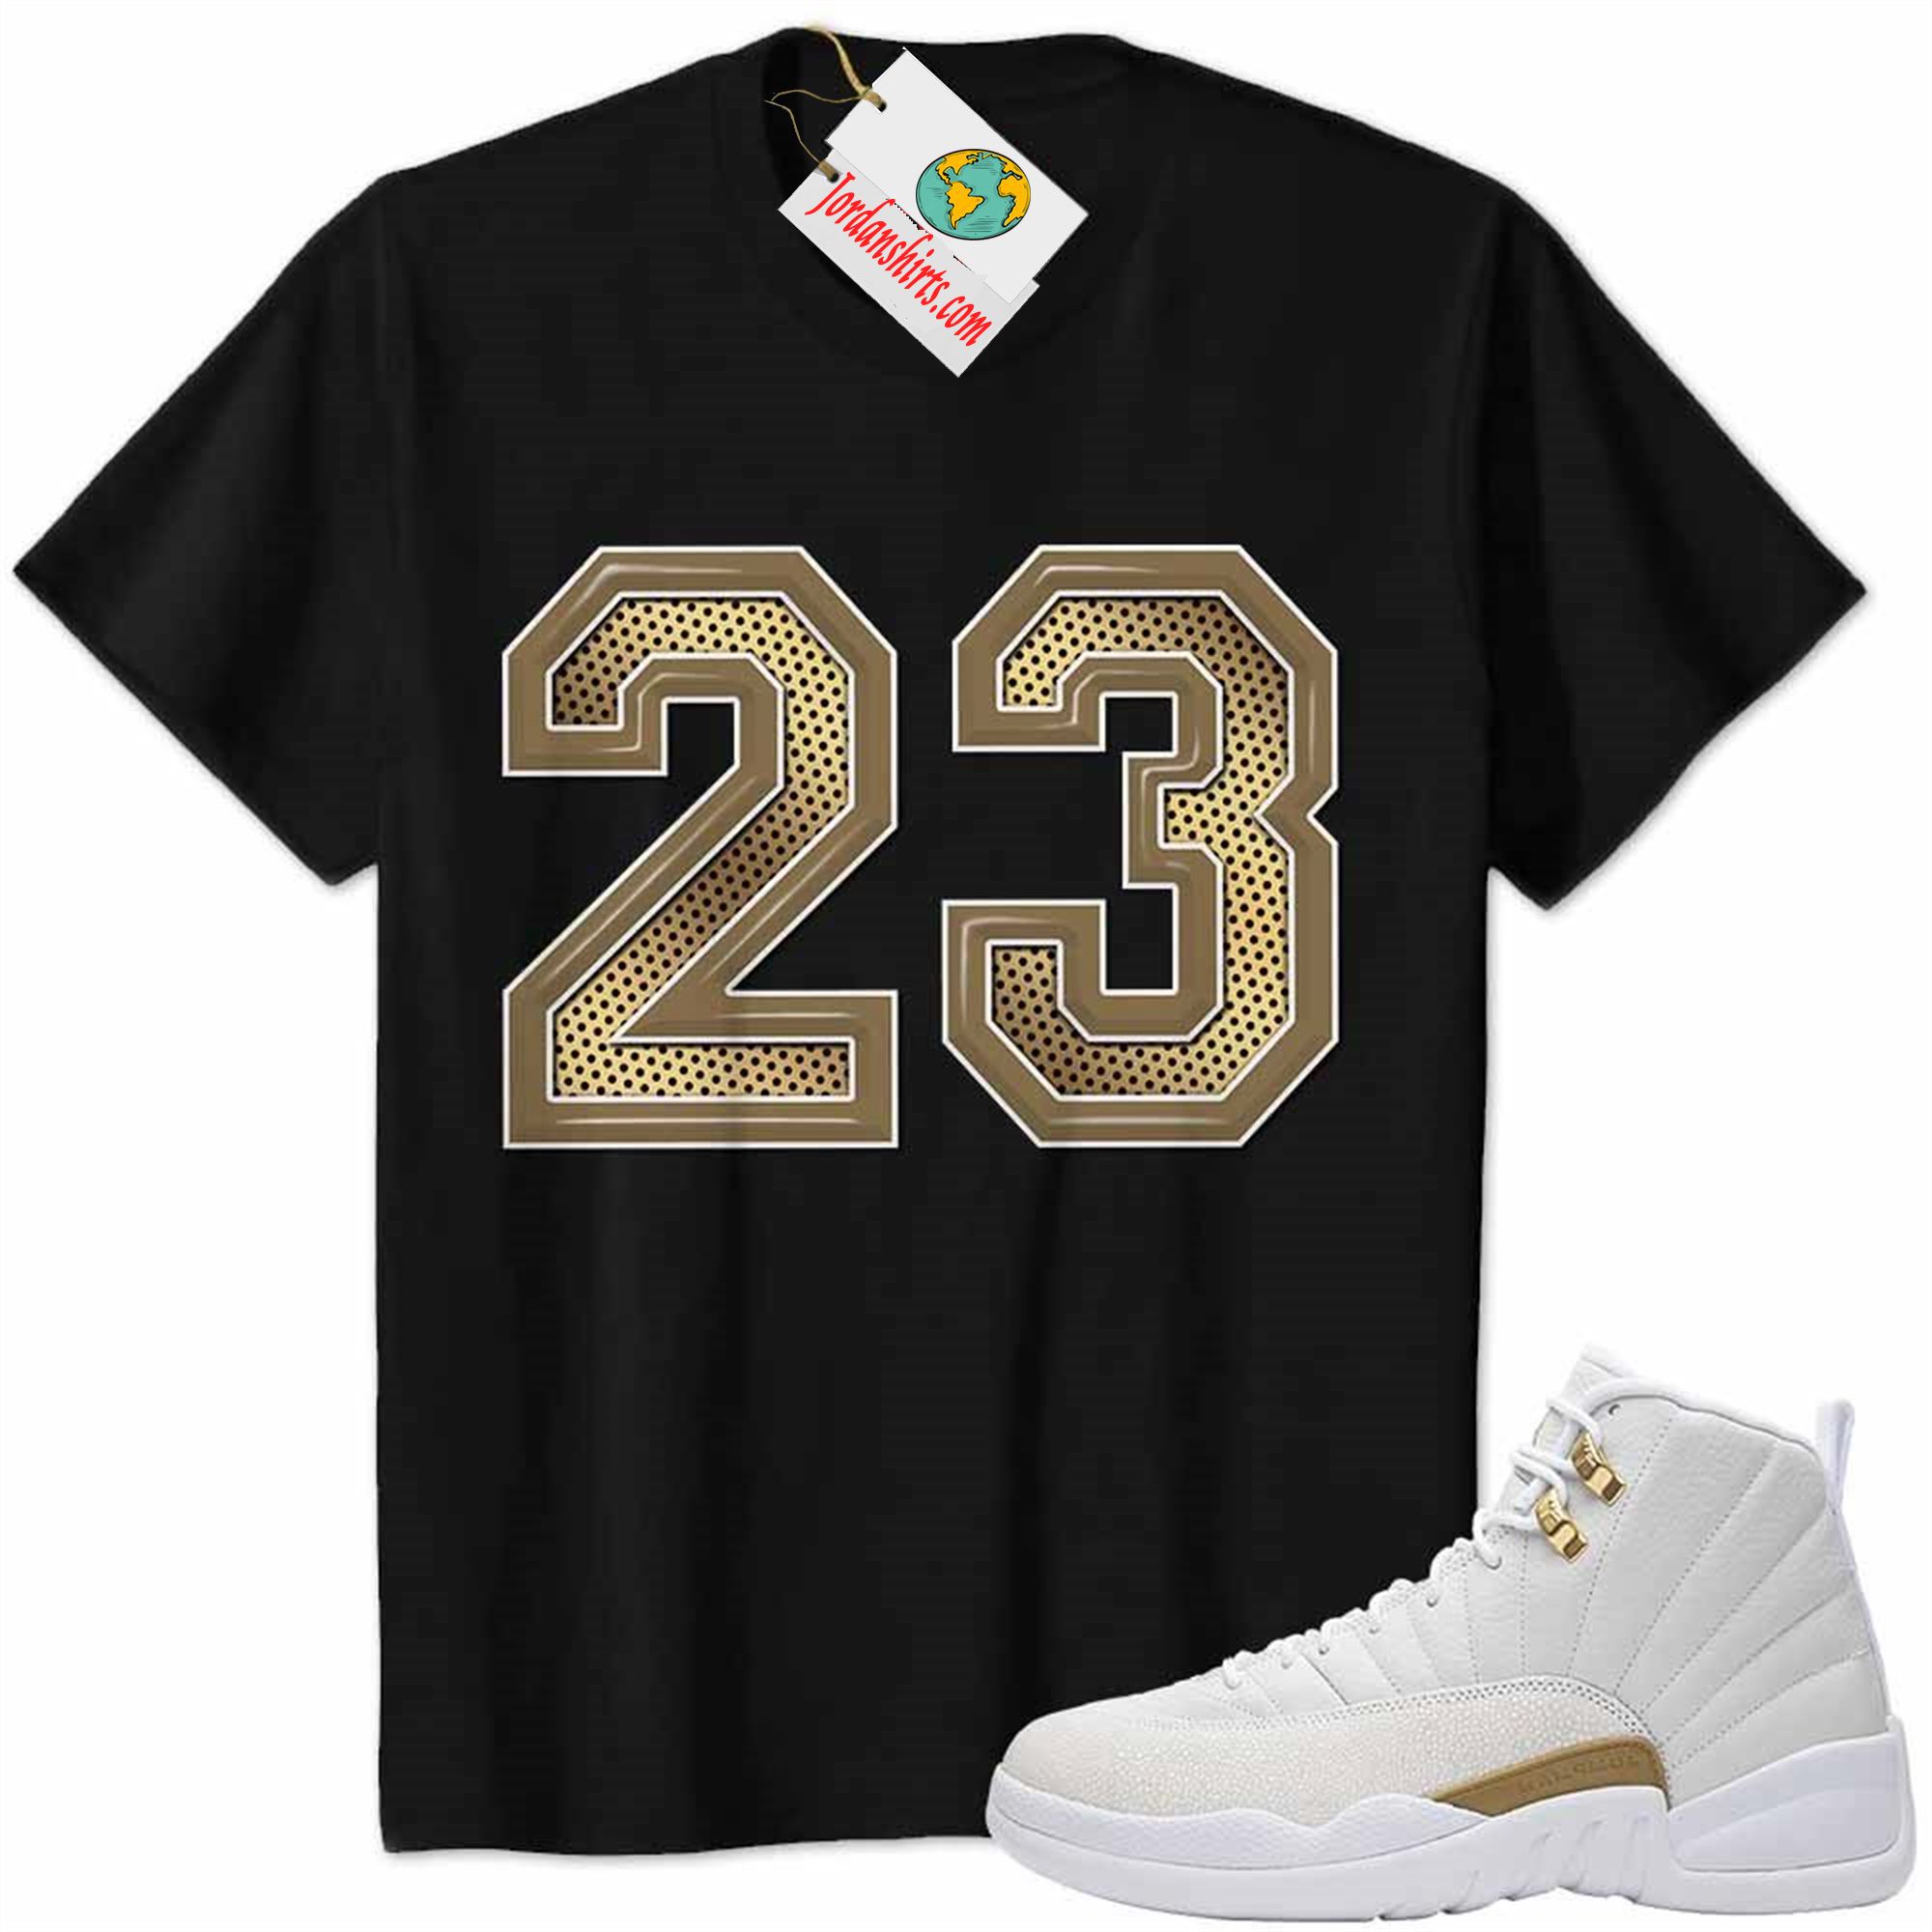 Jordan 12 Shirt, Jordan 12 Ovo Shirt Michael Jordan Number 23 Black Plus Size Up To 5xl